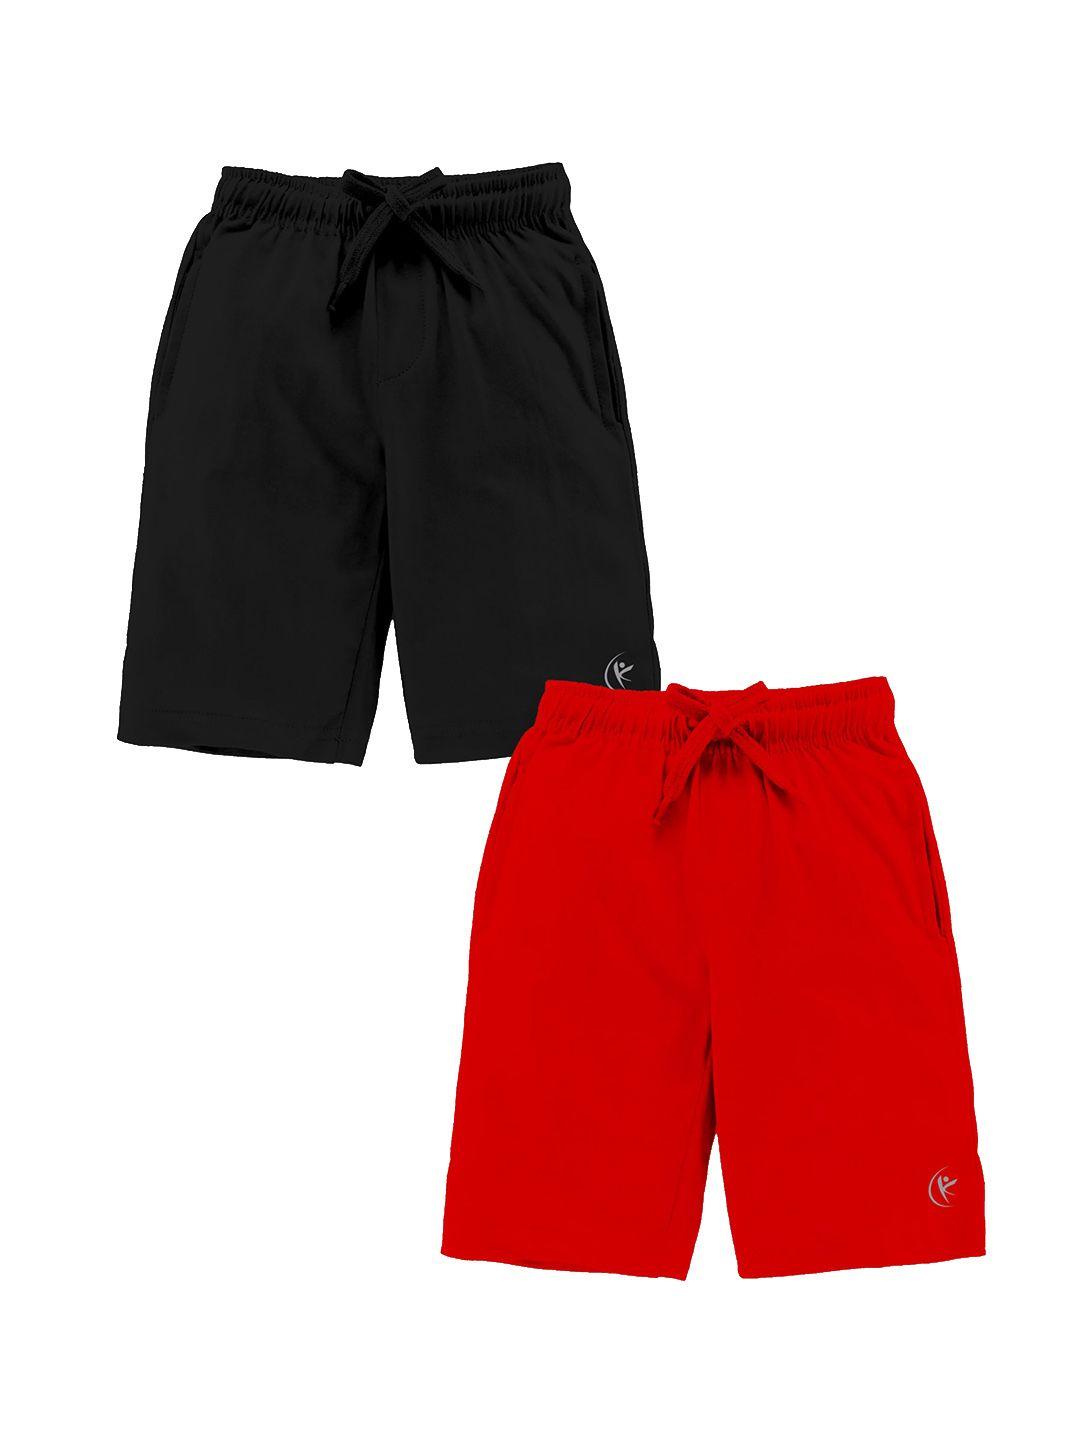 KiddoPanti Boys Red Pack Of 2 Cotton Shorts